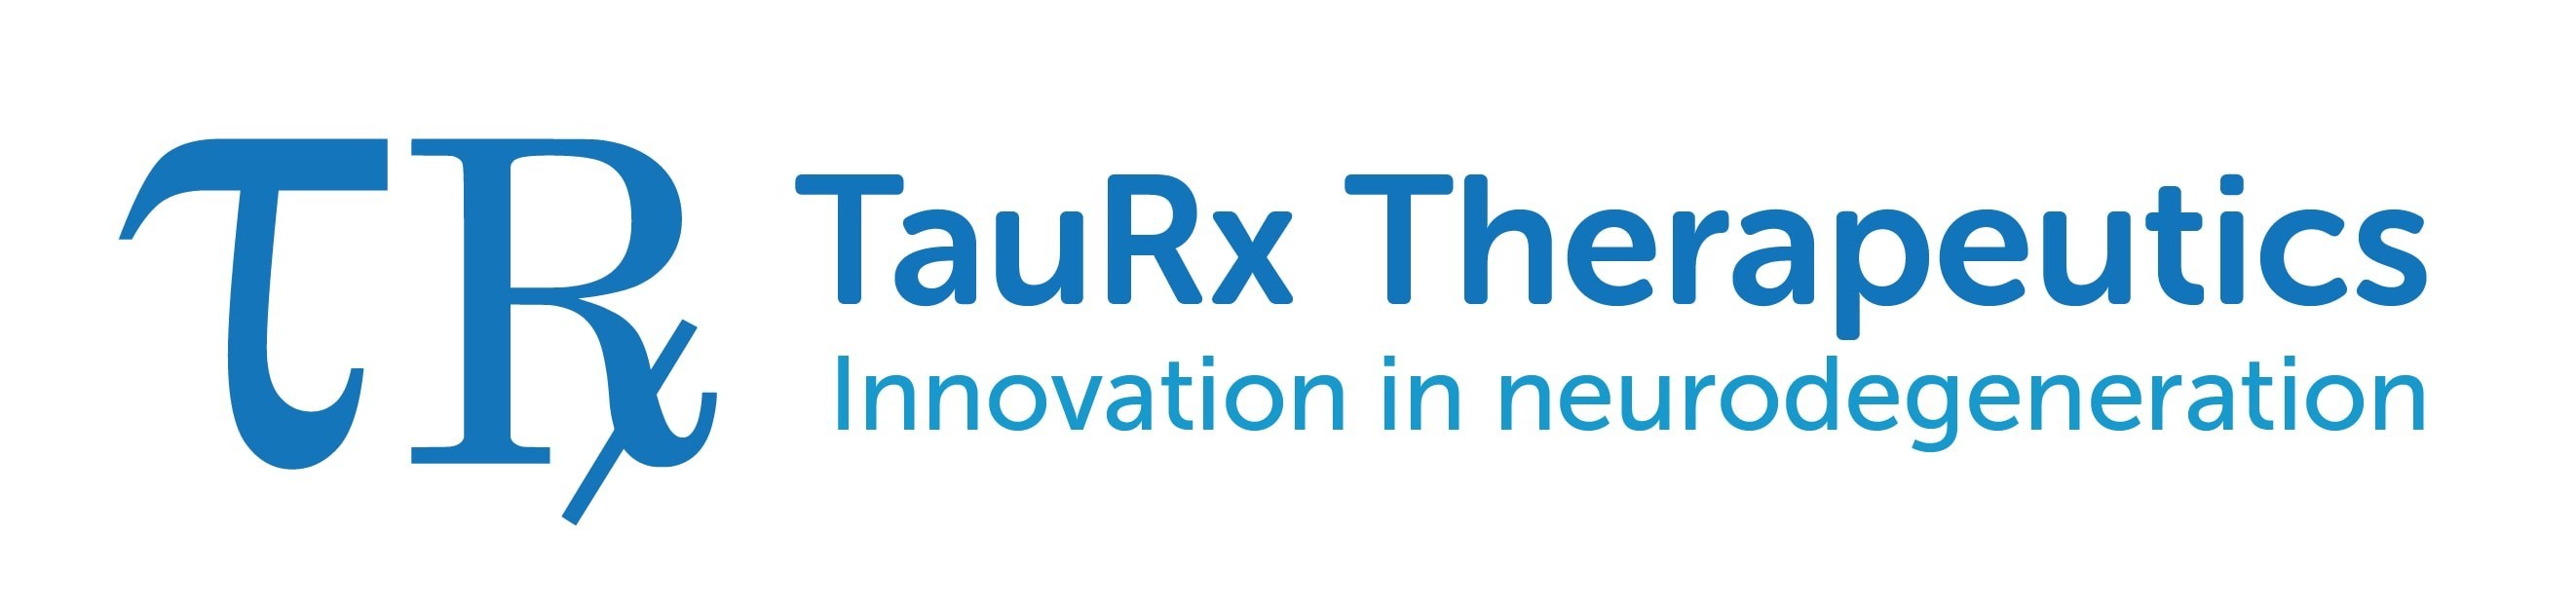 FDA Grants Orphandrug Designation for TauRx's LMTX in Frontotemporal